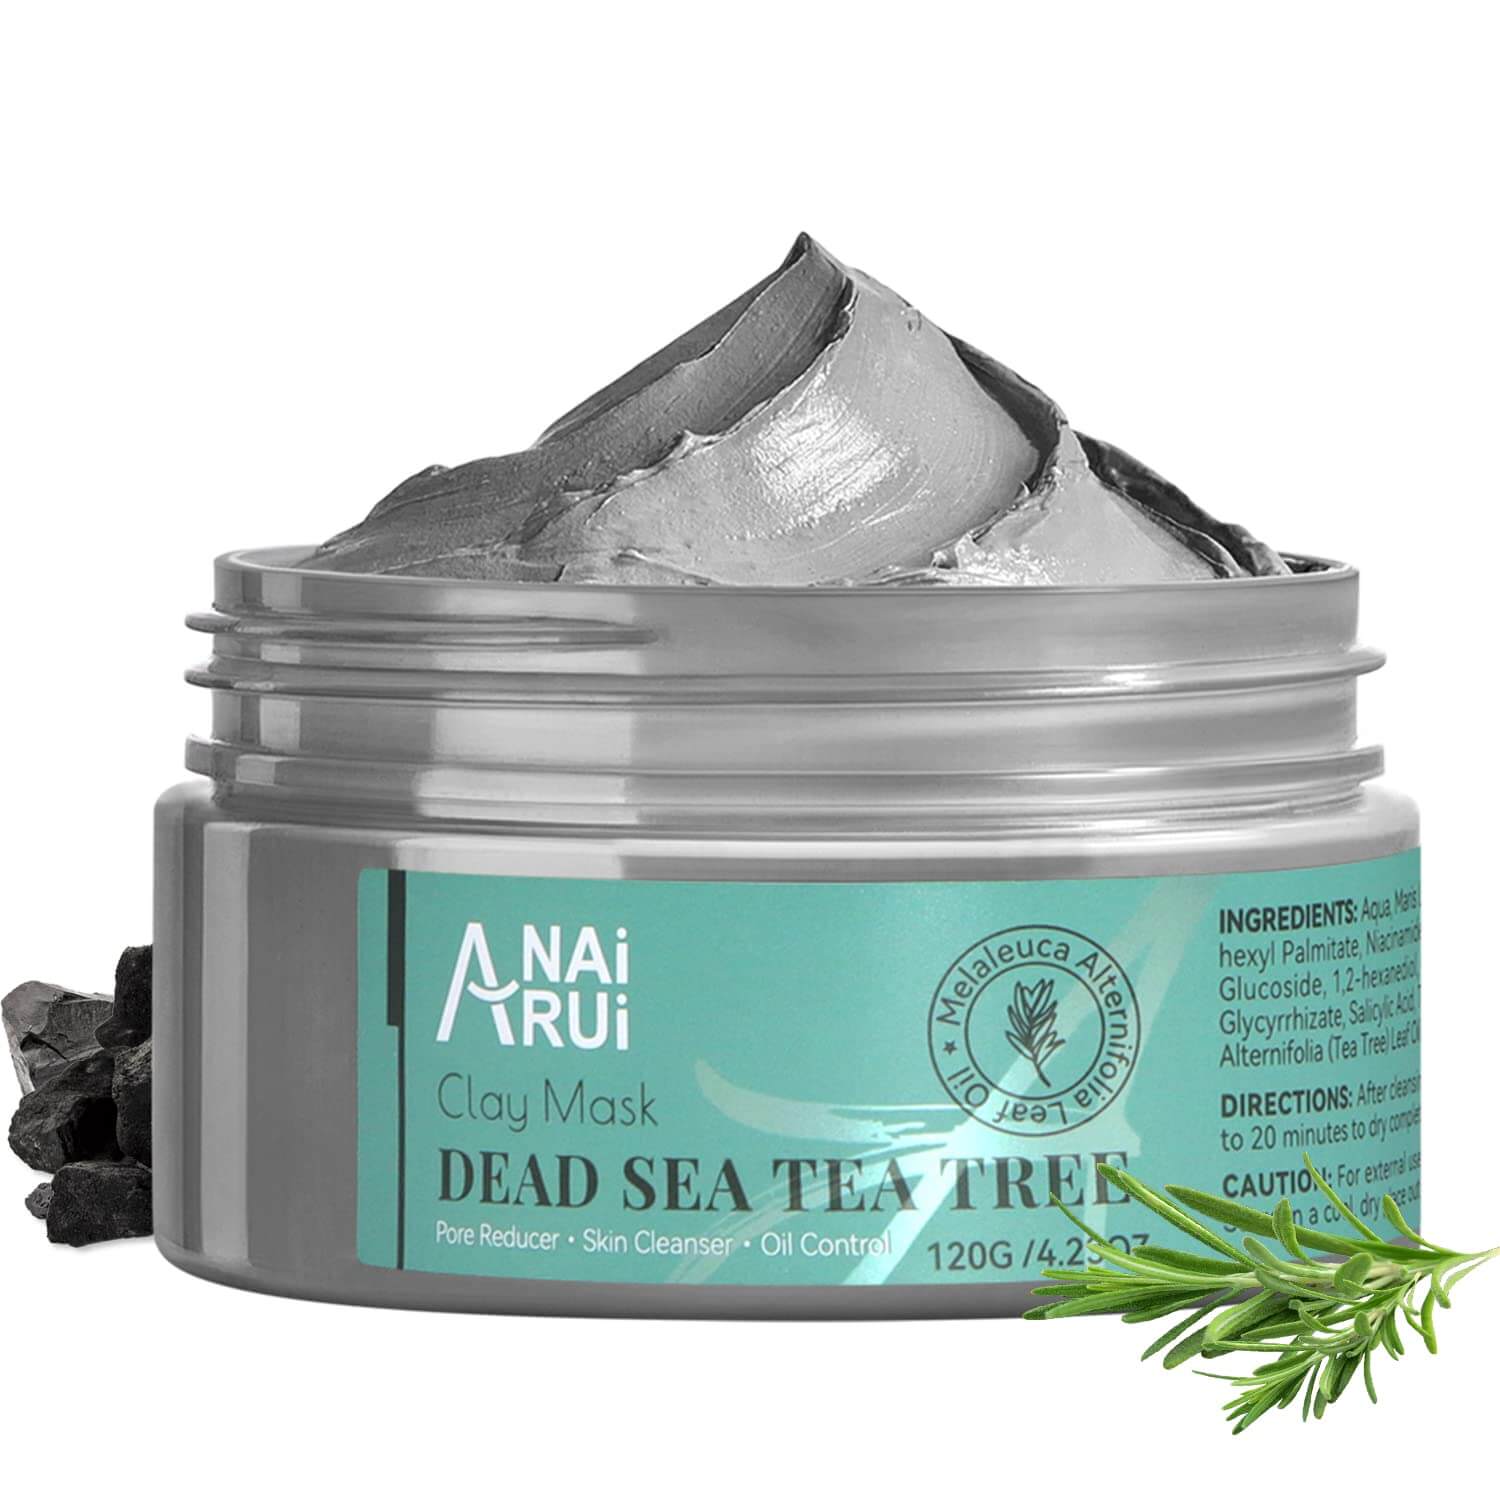 Dead Sea Mud Face Mask with Tea Tree for Acne, Remove Blackheads